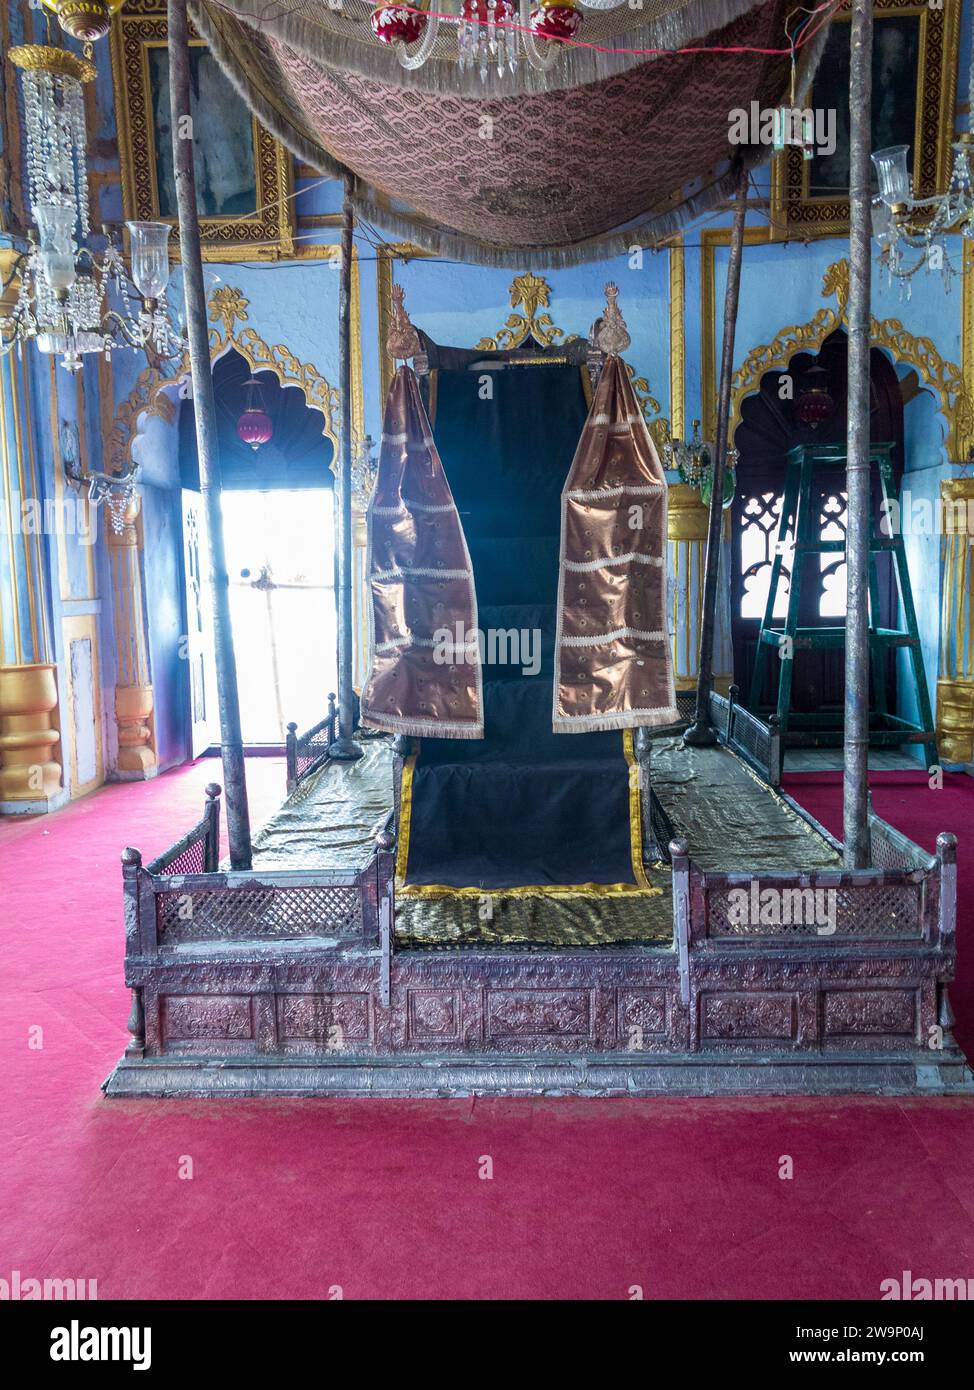 The Mimber used for Majlis (Mourning Congregation) during Muharram. Chota Imambara. VWF3+PV Lucknow, Uttar Pradesh, Inde Stock Photo